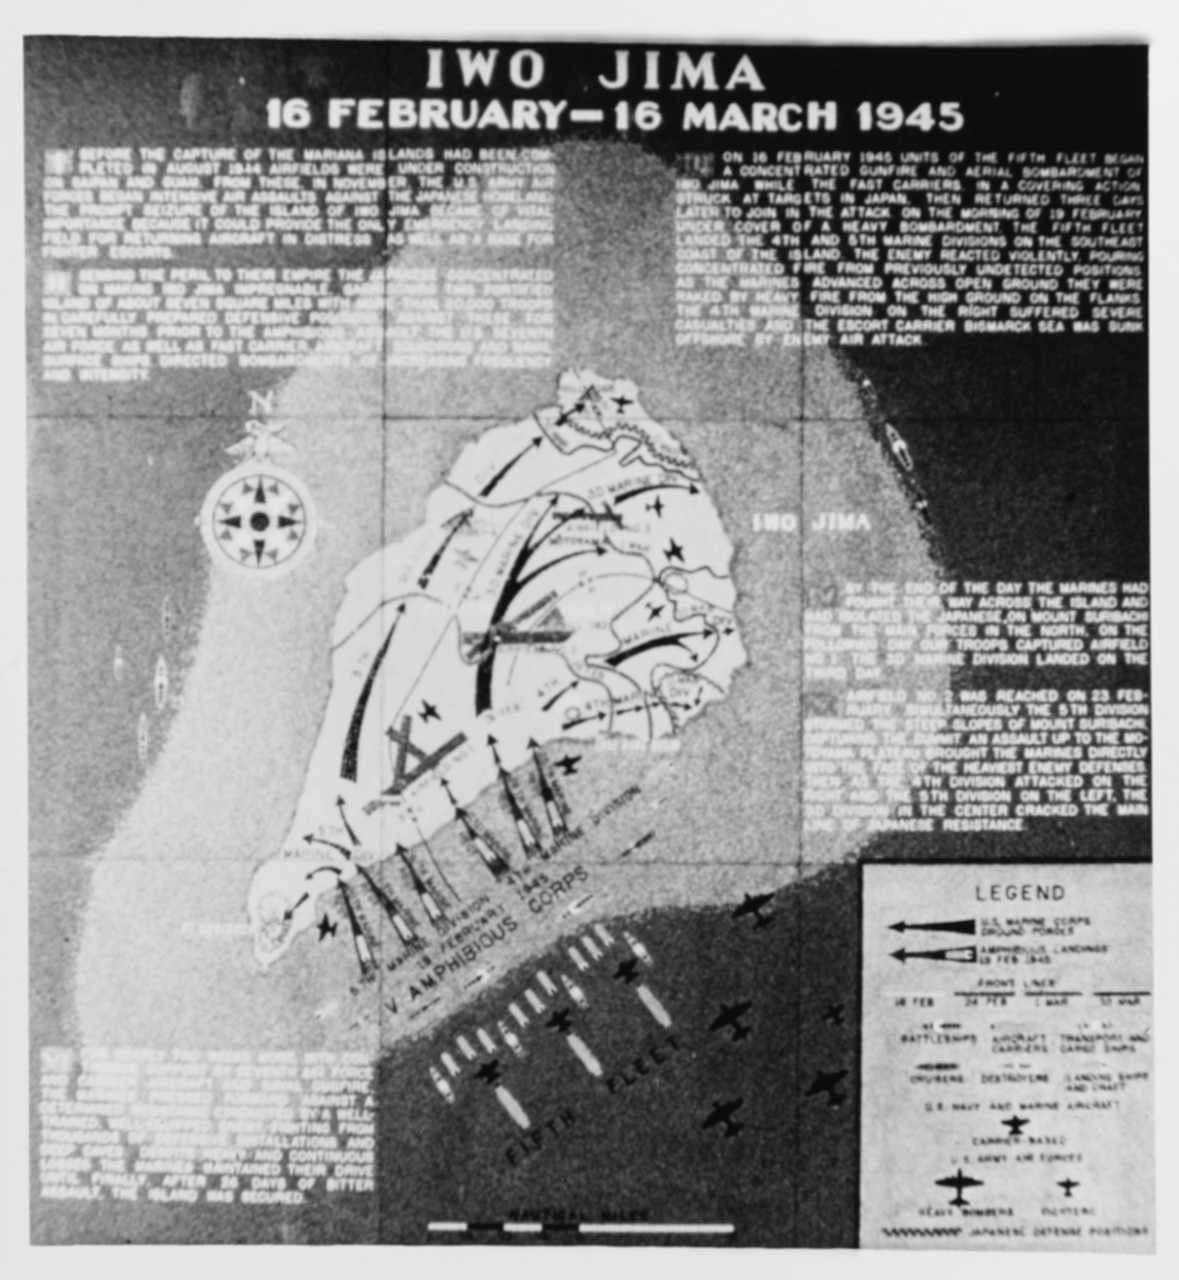 Iwo Jima -- World War II Battle Chart 16 February - 16 March 1945